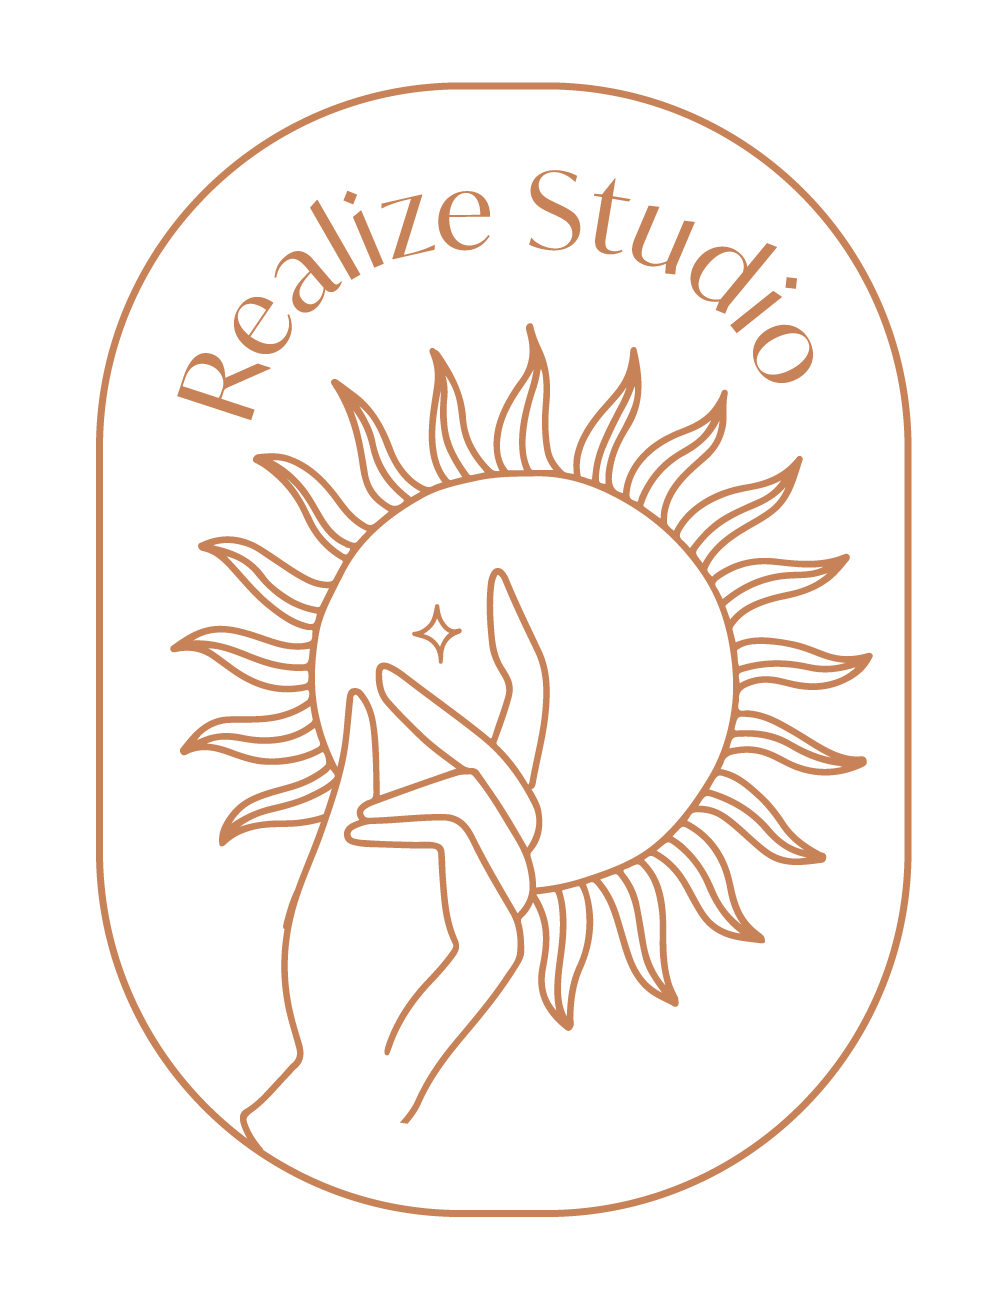 Realize Studio